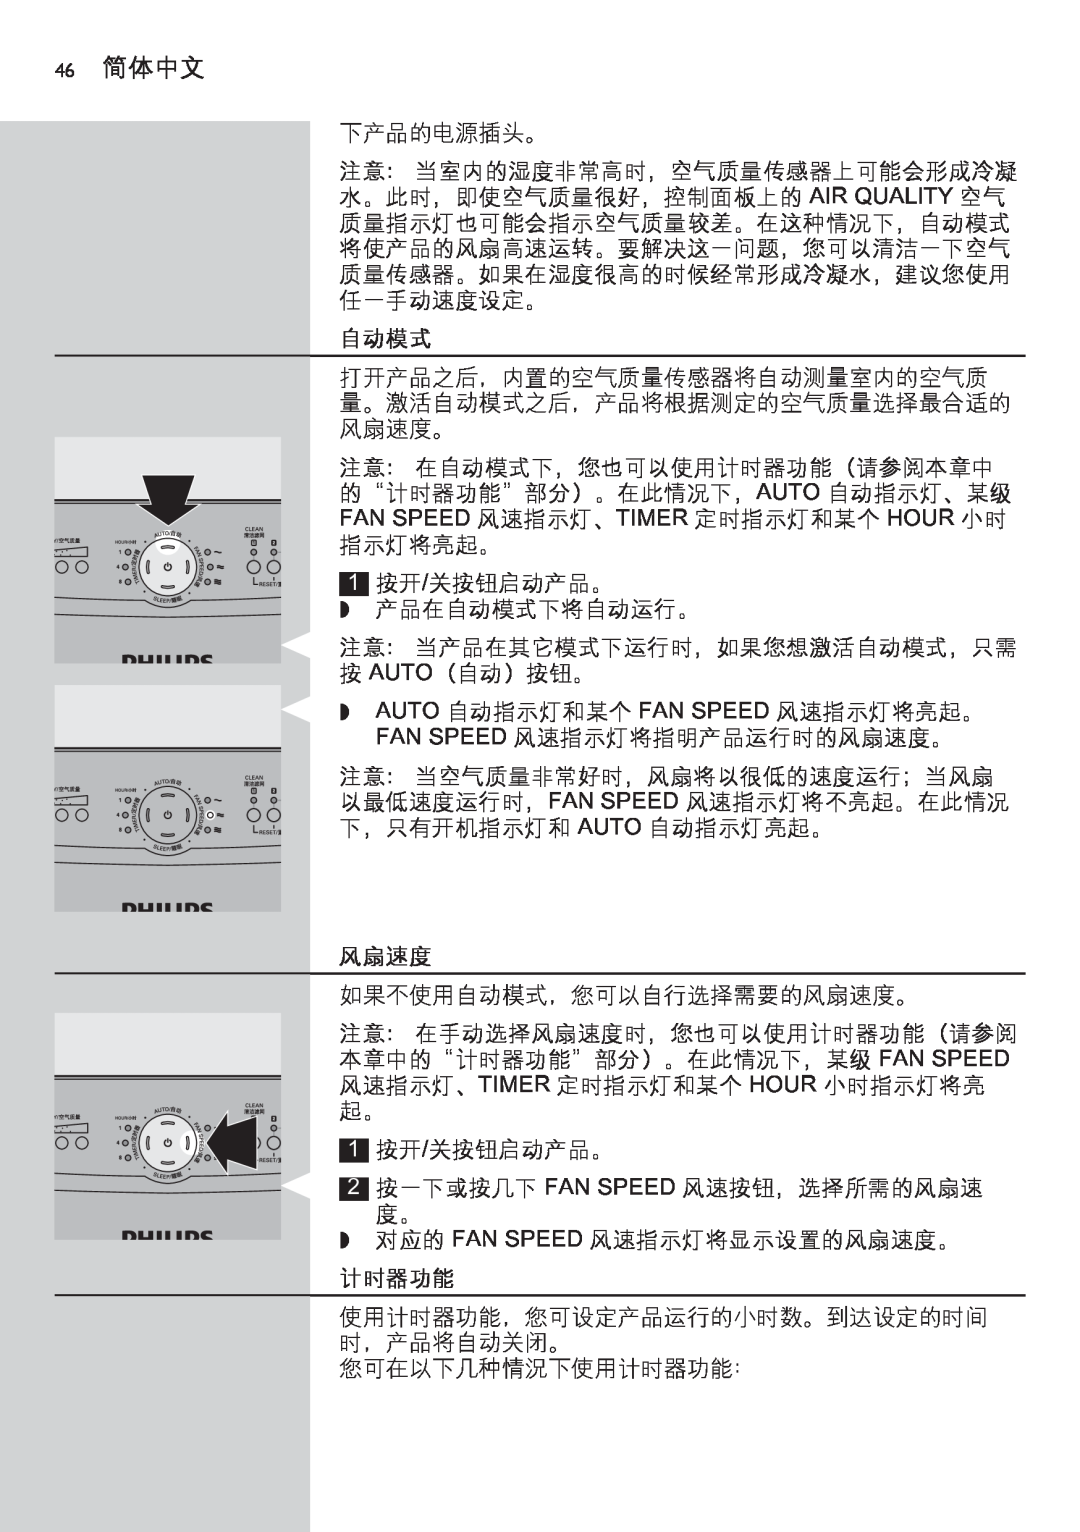 Philips AC4002 manual 46 简体中文, 自动模式, 风扇速度, 计时器功能 